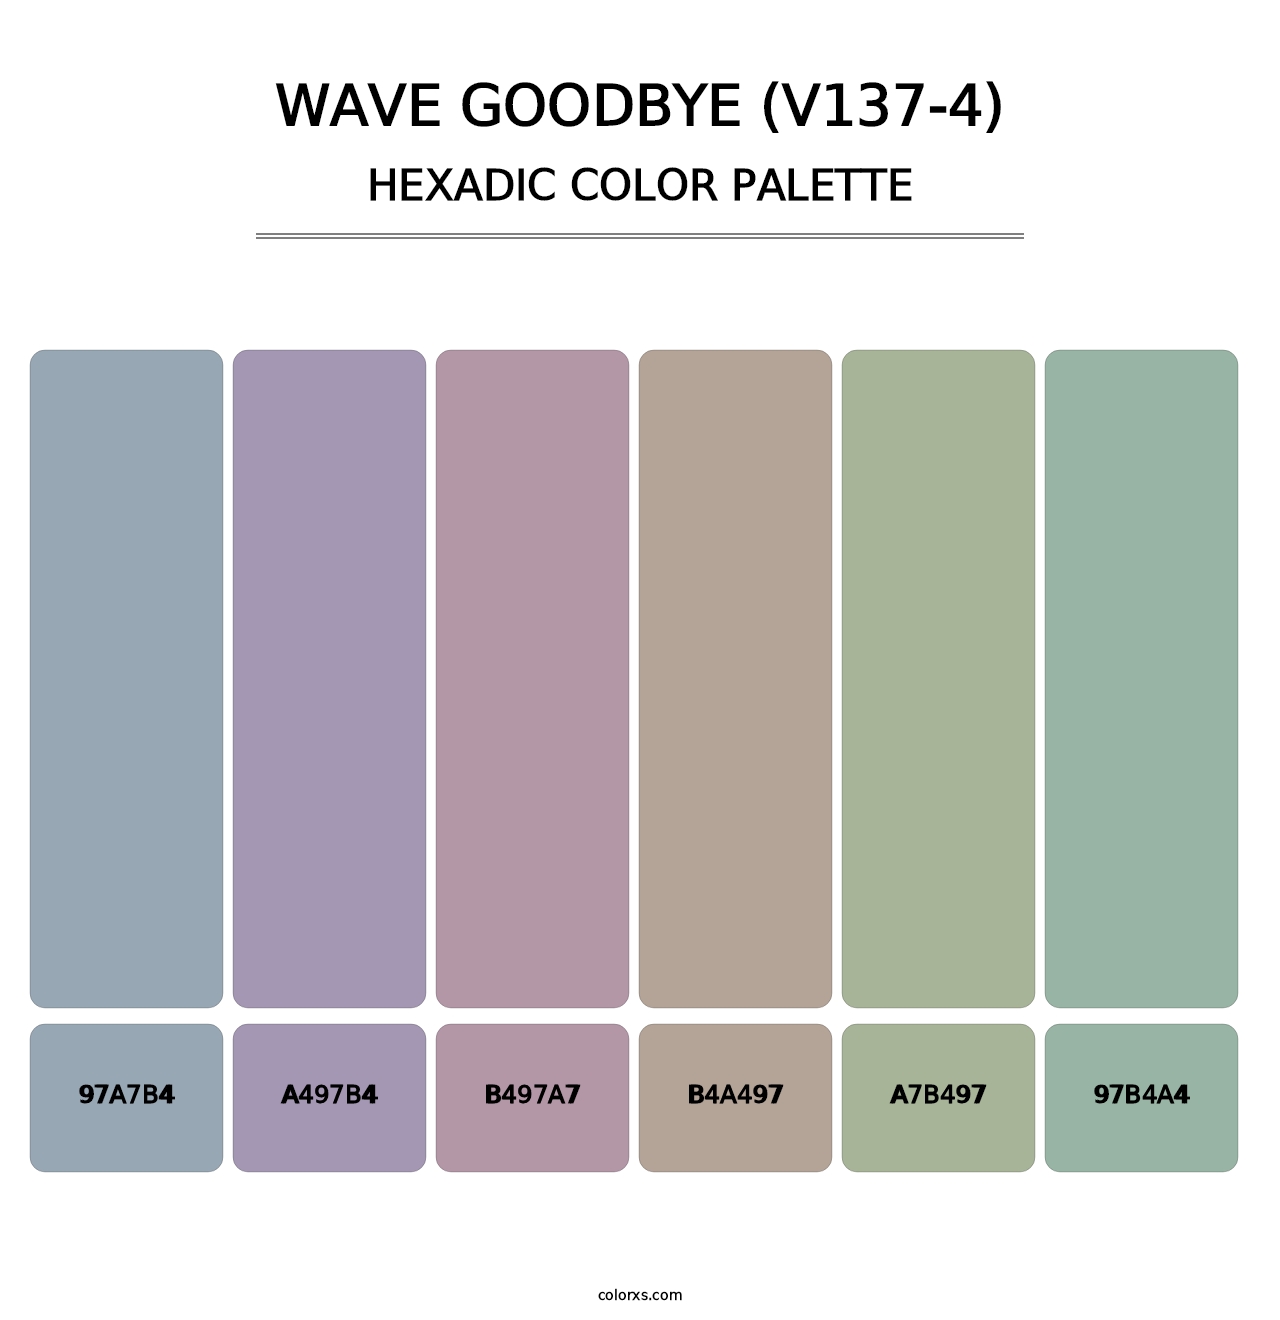 Wave Goodbye (V137-4) - Hexadic Color Palette